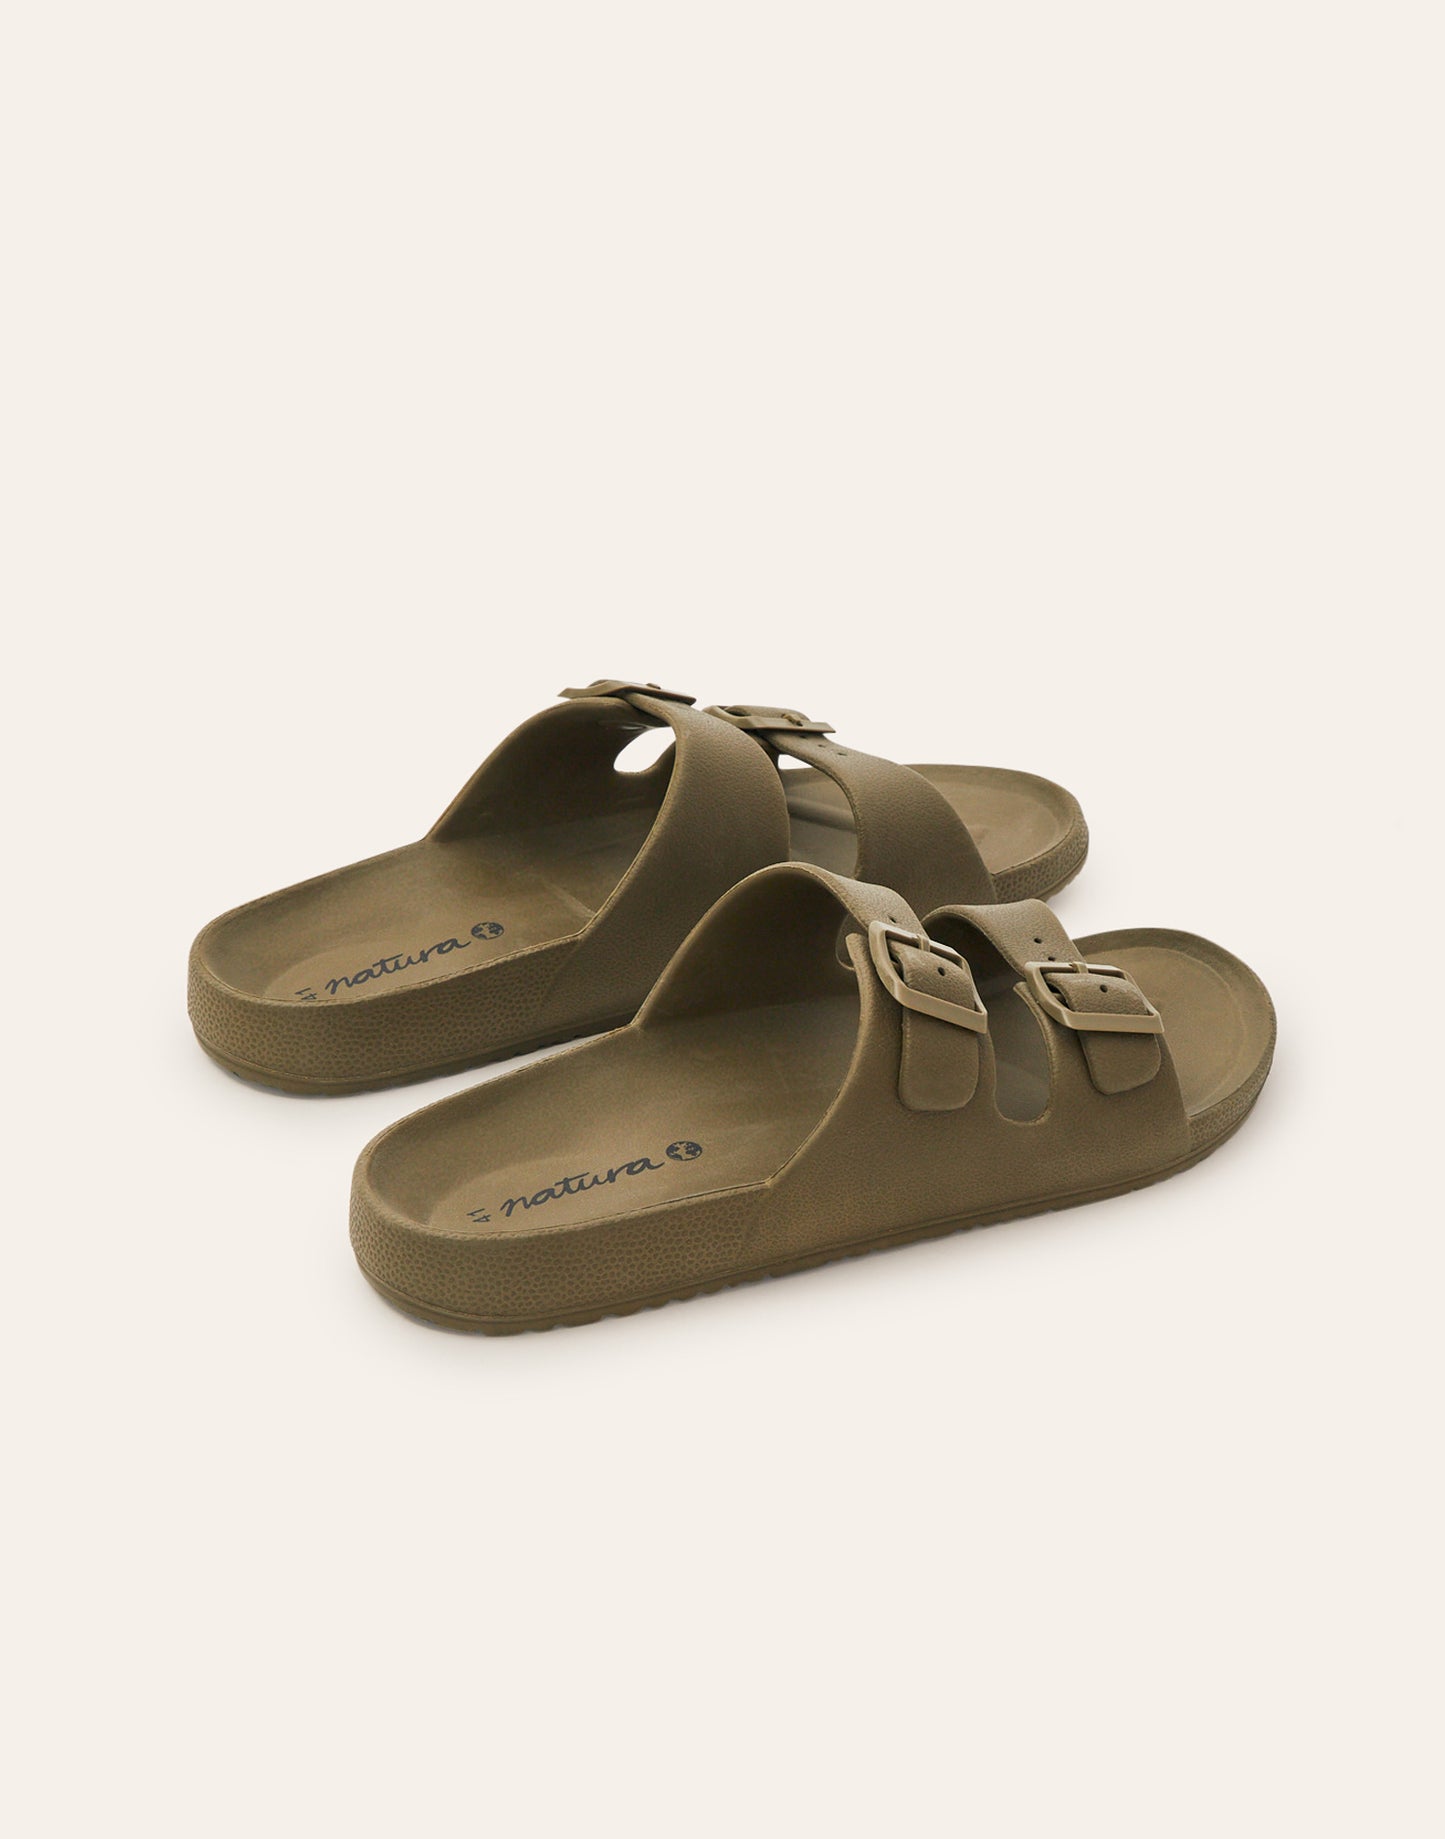 Men's double buckle sandal